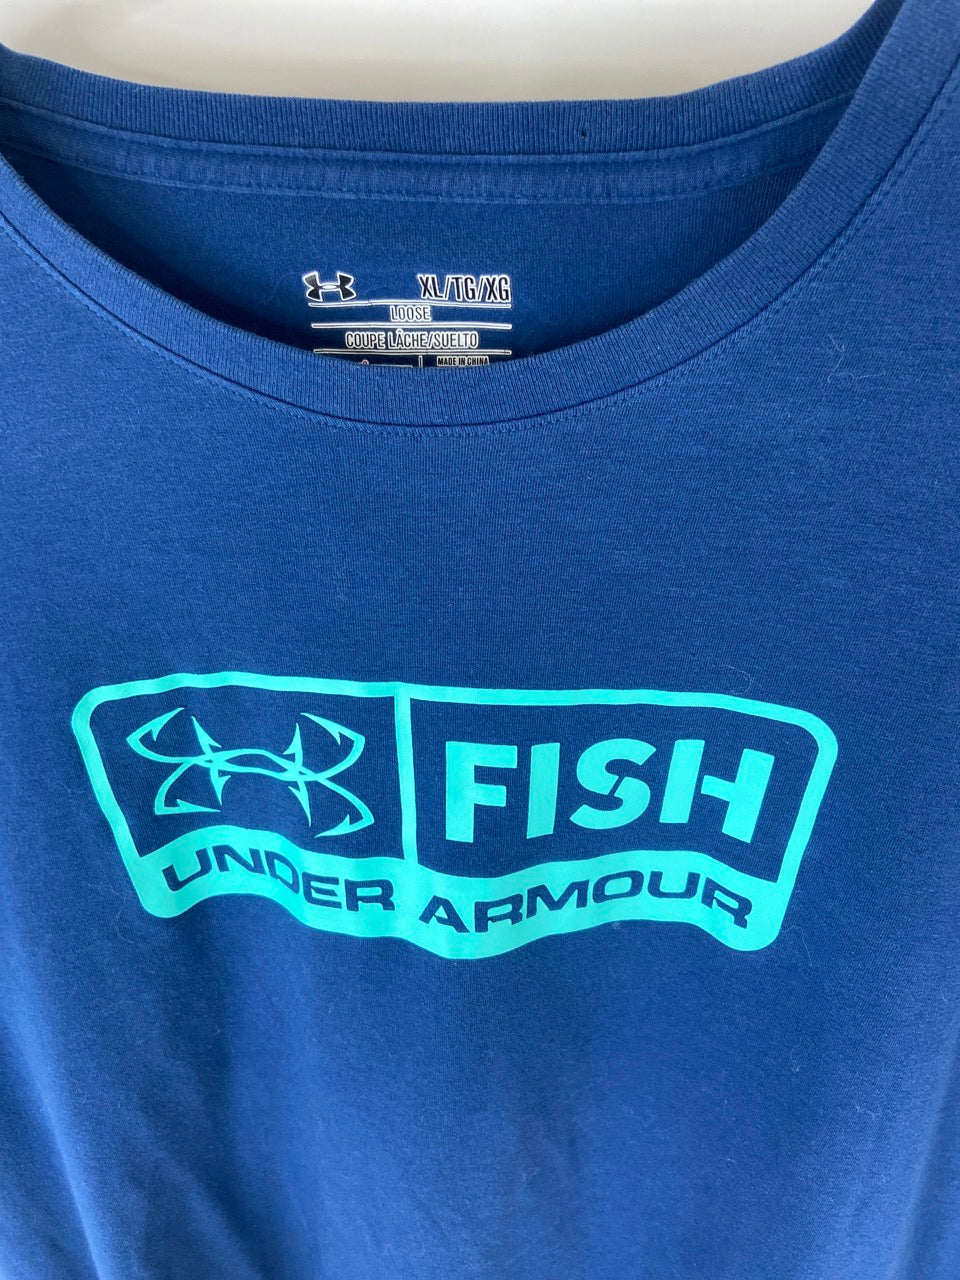 Fish Under Armour T-shirt- XL